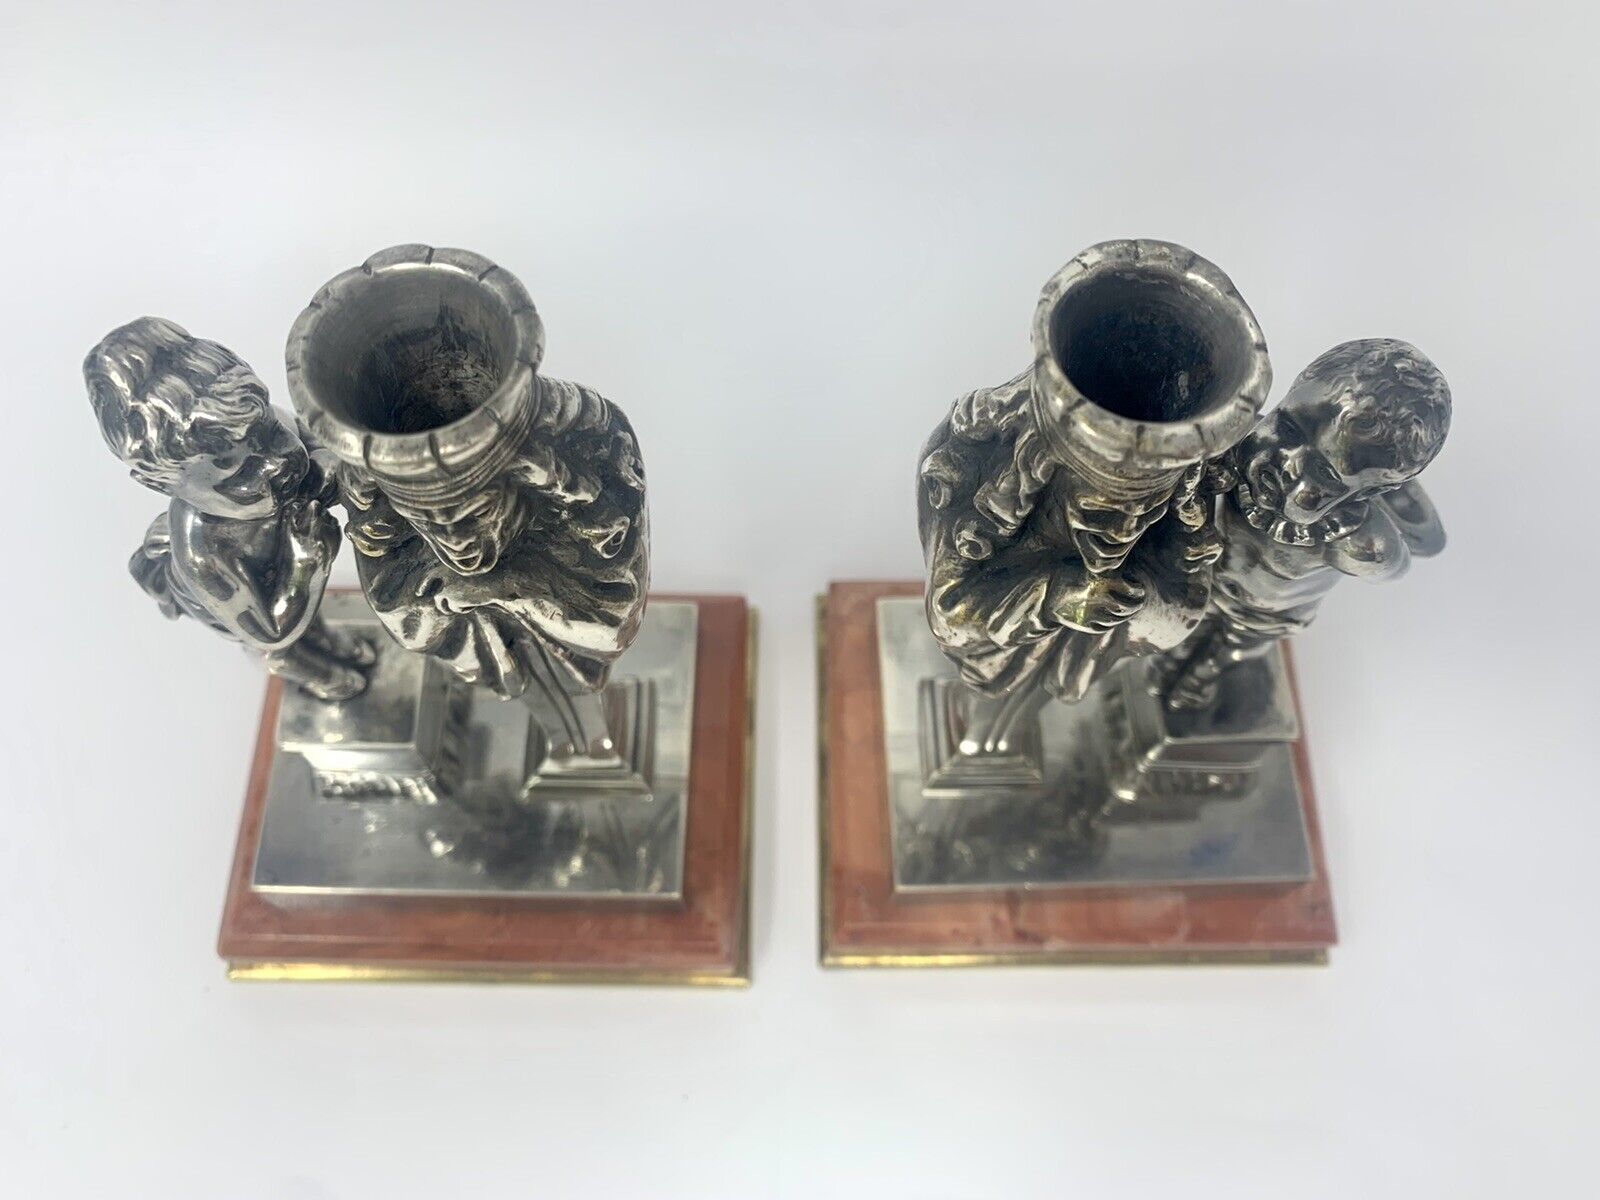  Rare Pair of antique French figural bronze candlesticks by Louis Kley Без бренда - фотография #6